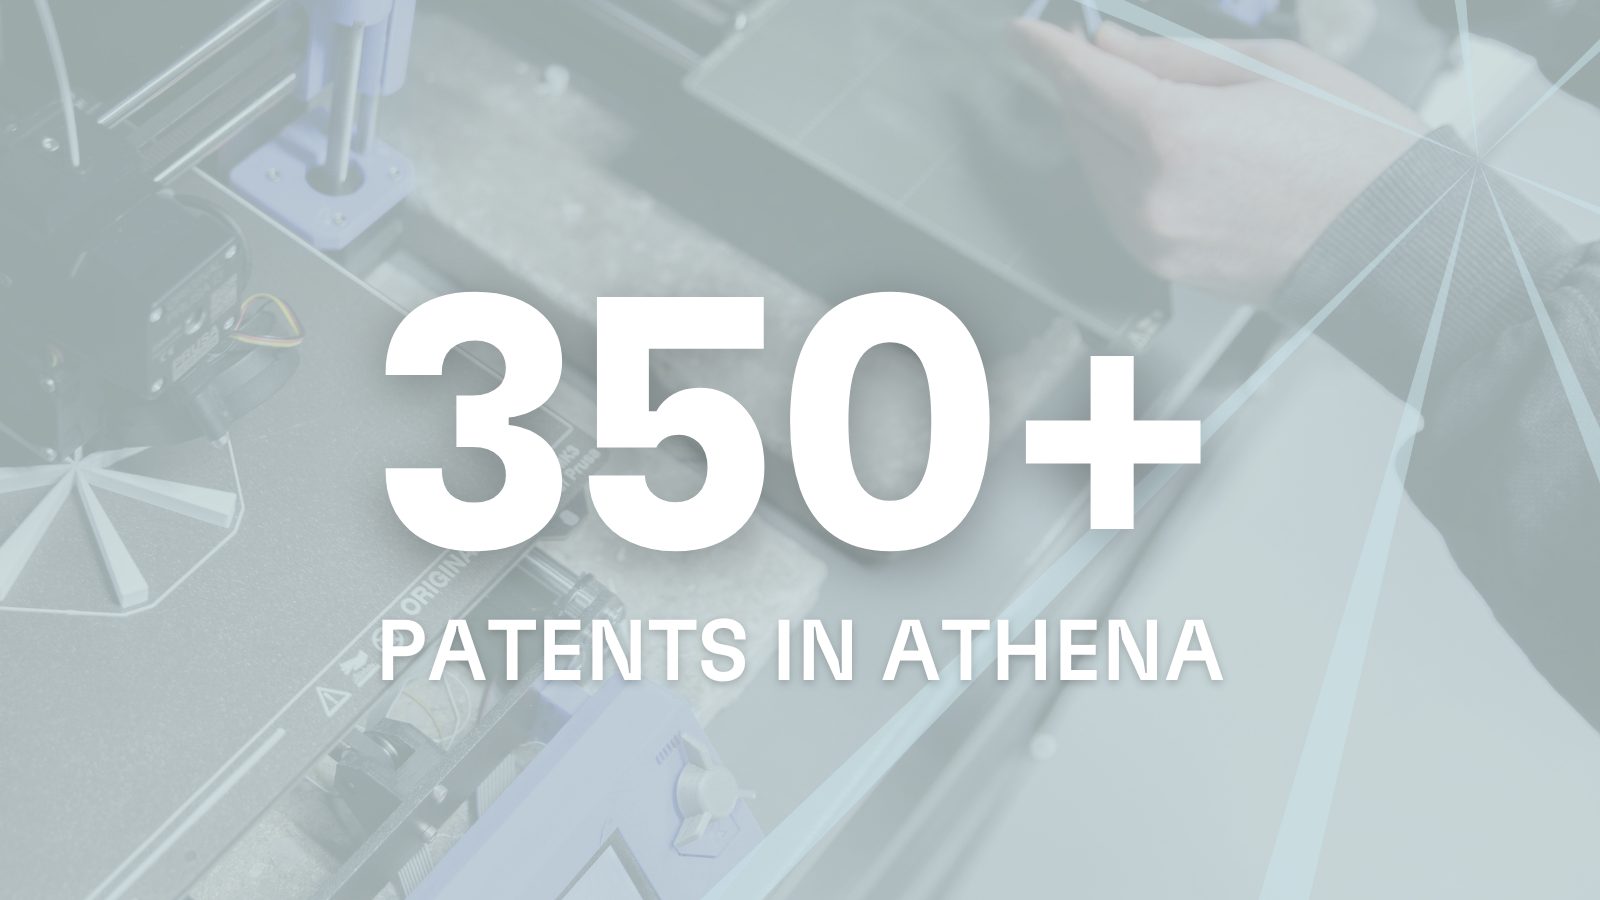 ATHENA patents